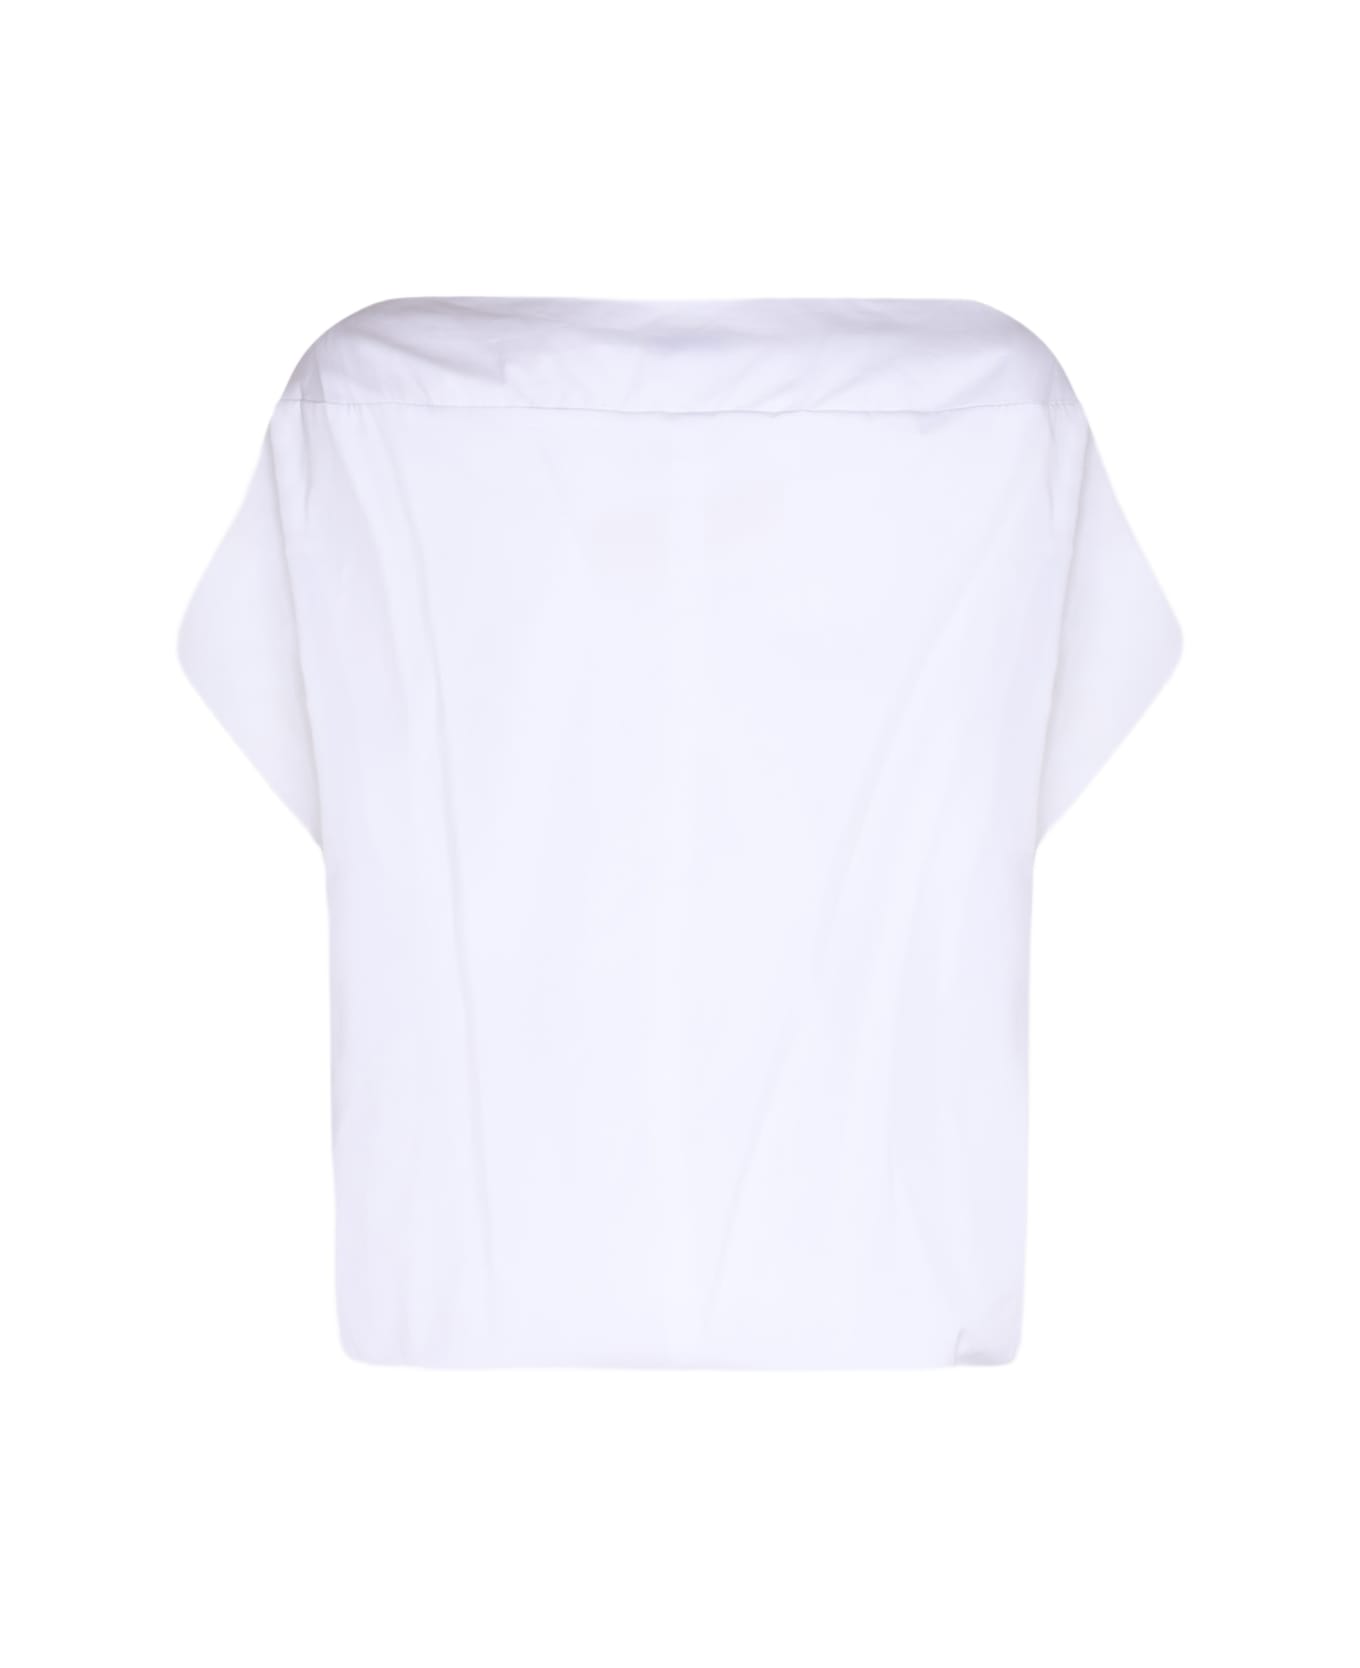 Dries Van Noten White Cotton Shirt - White